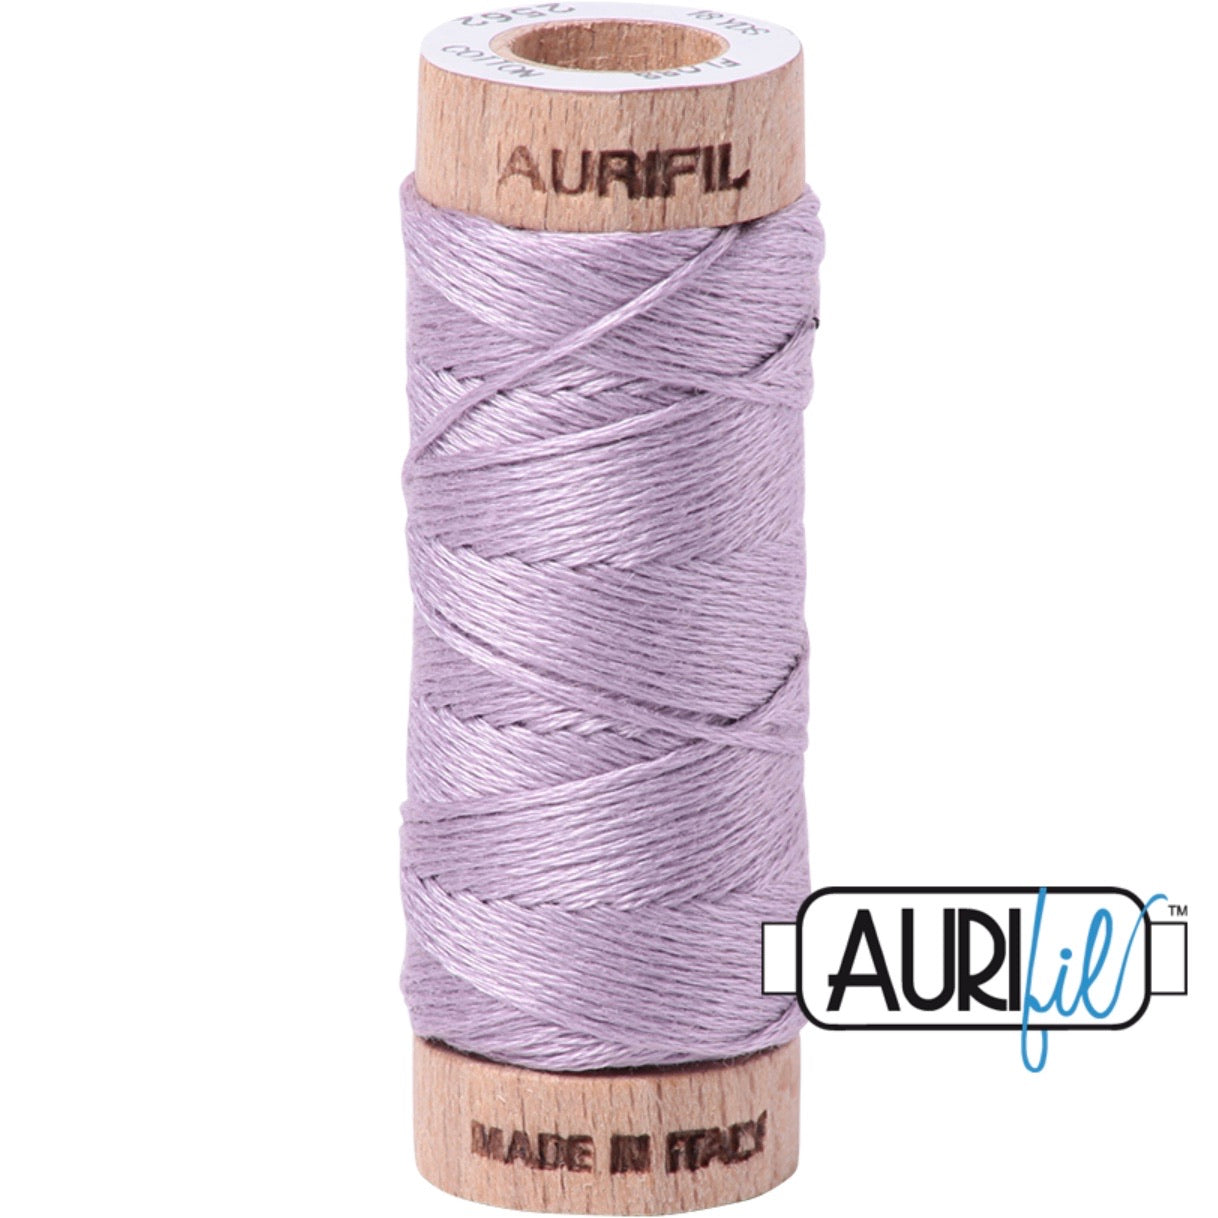 Aurifil Cotton Floss 6 Strand - 18yd - 2562 - Lilac